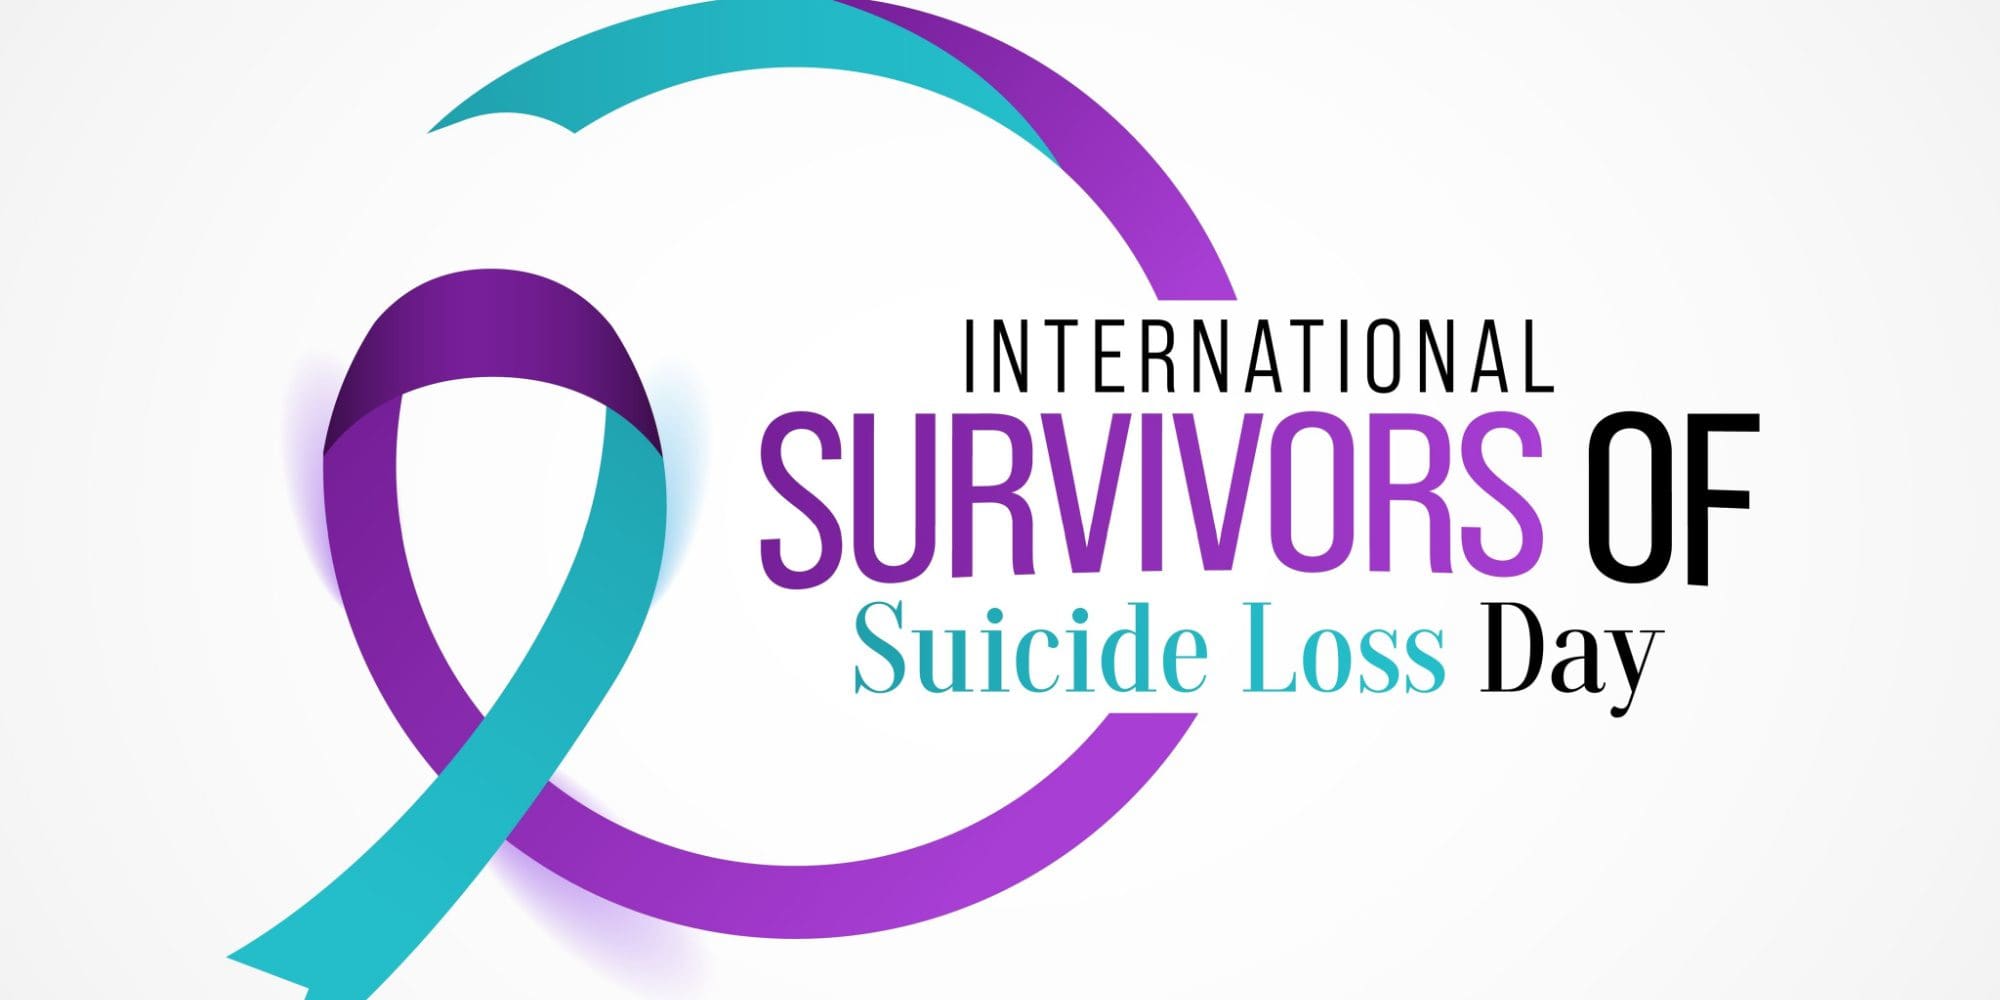 International Survivors of Suicide Loss Day in November